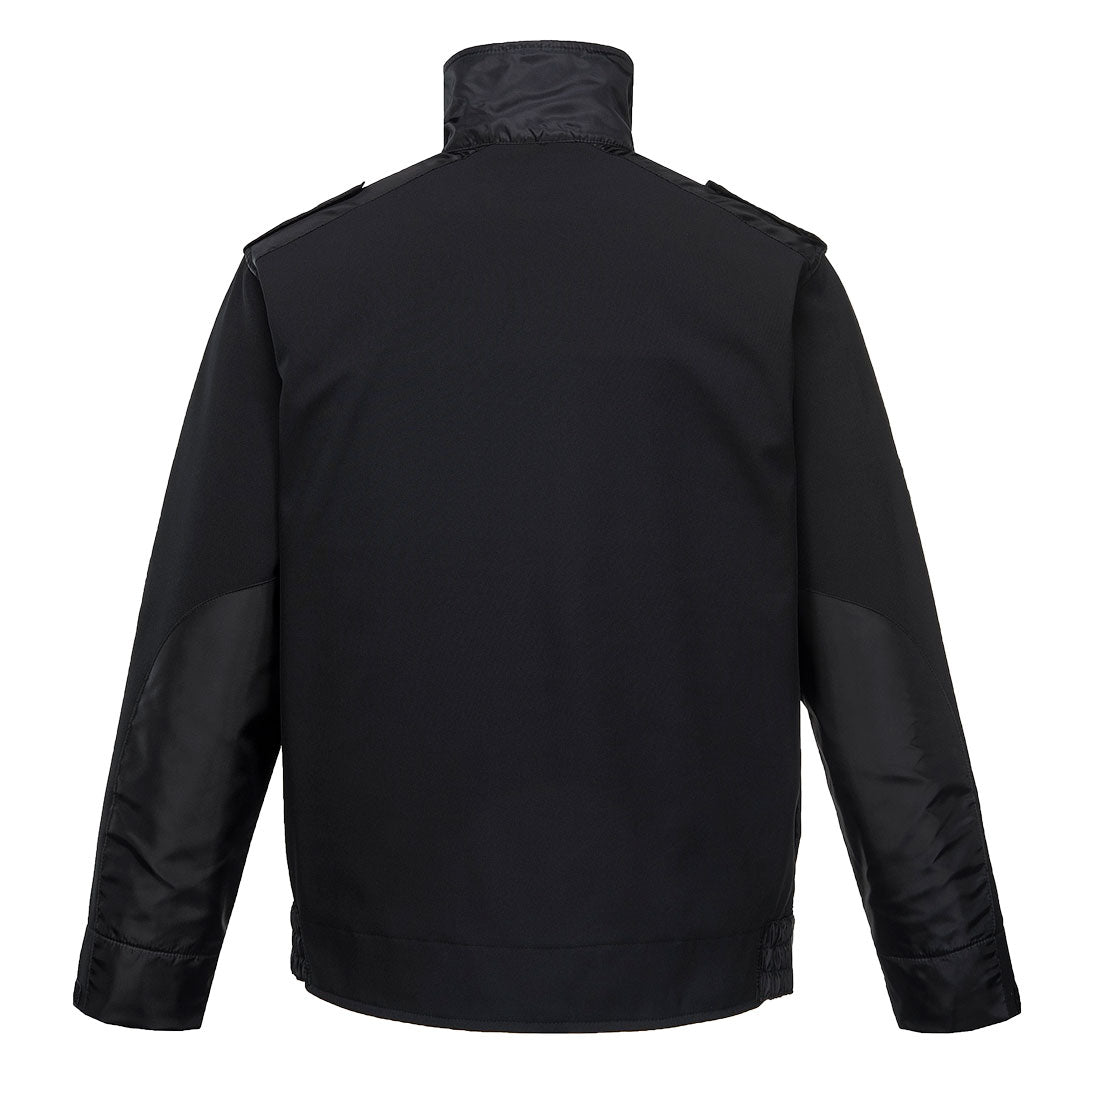 Warden Softshell Jacket - made by Huski